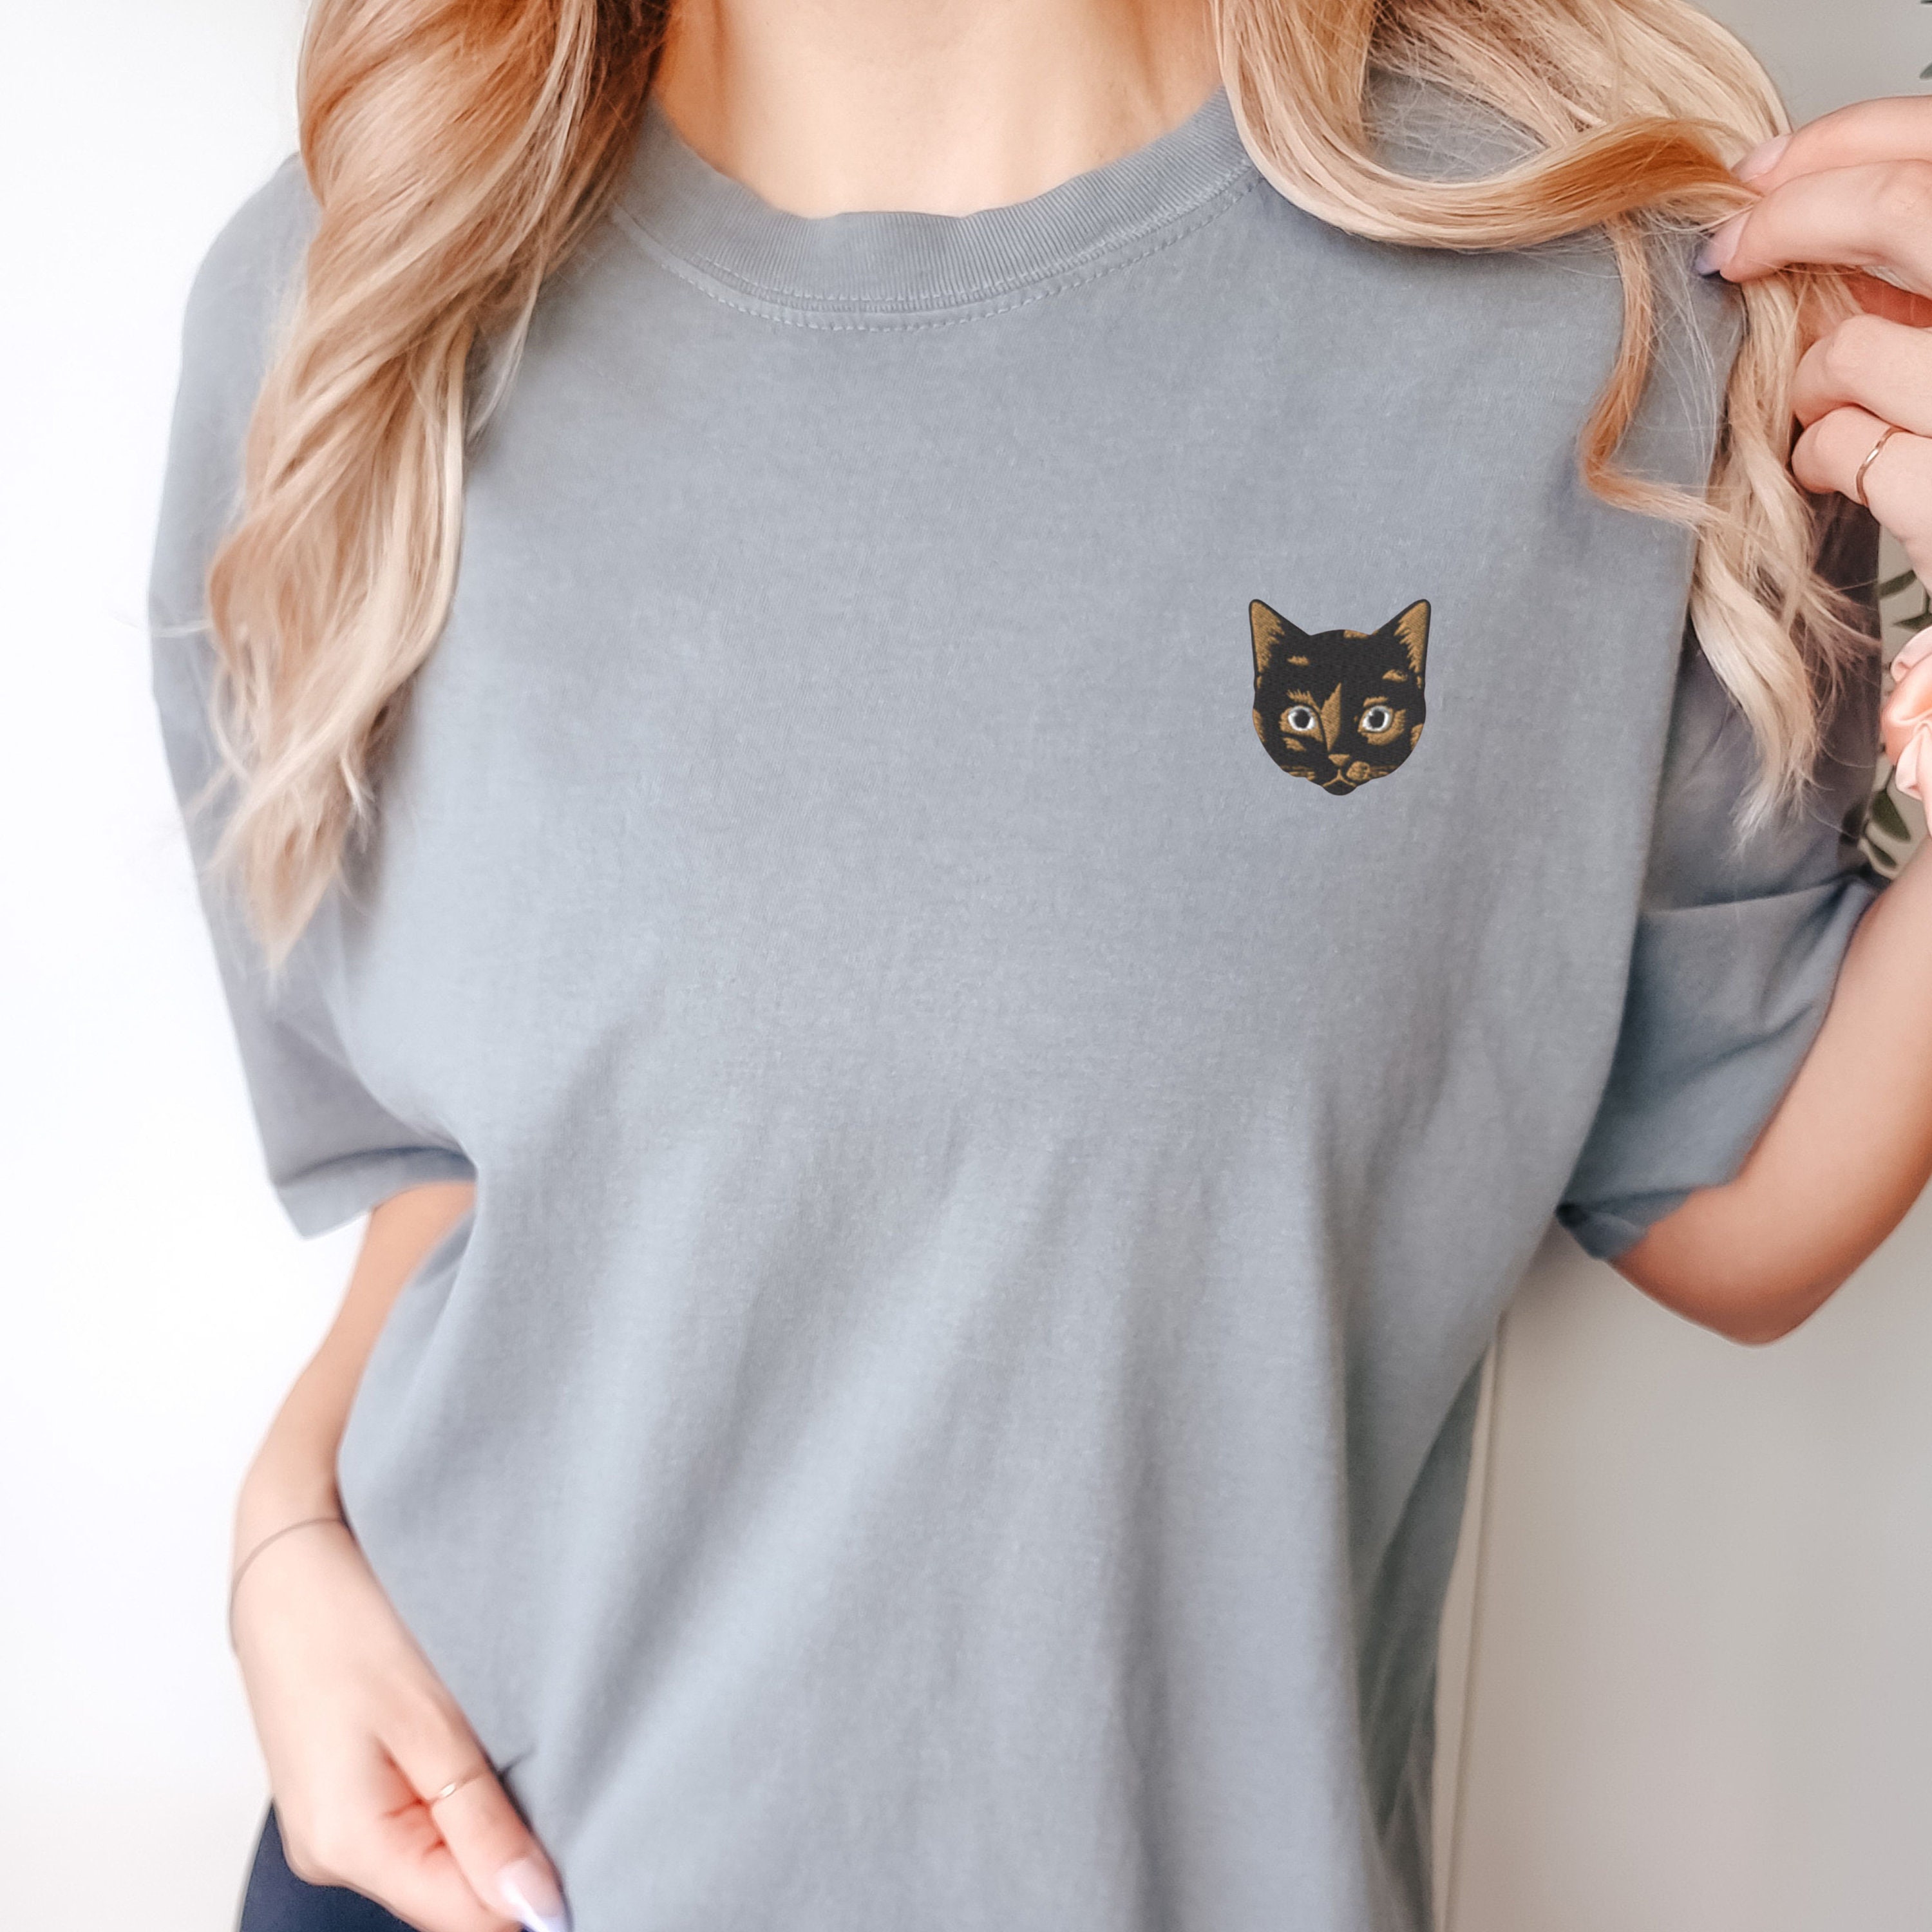 Beluga Cat Meme Face Smiling T Shirt Cotton Men Women Diy Print